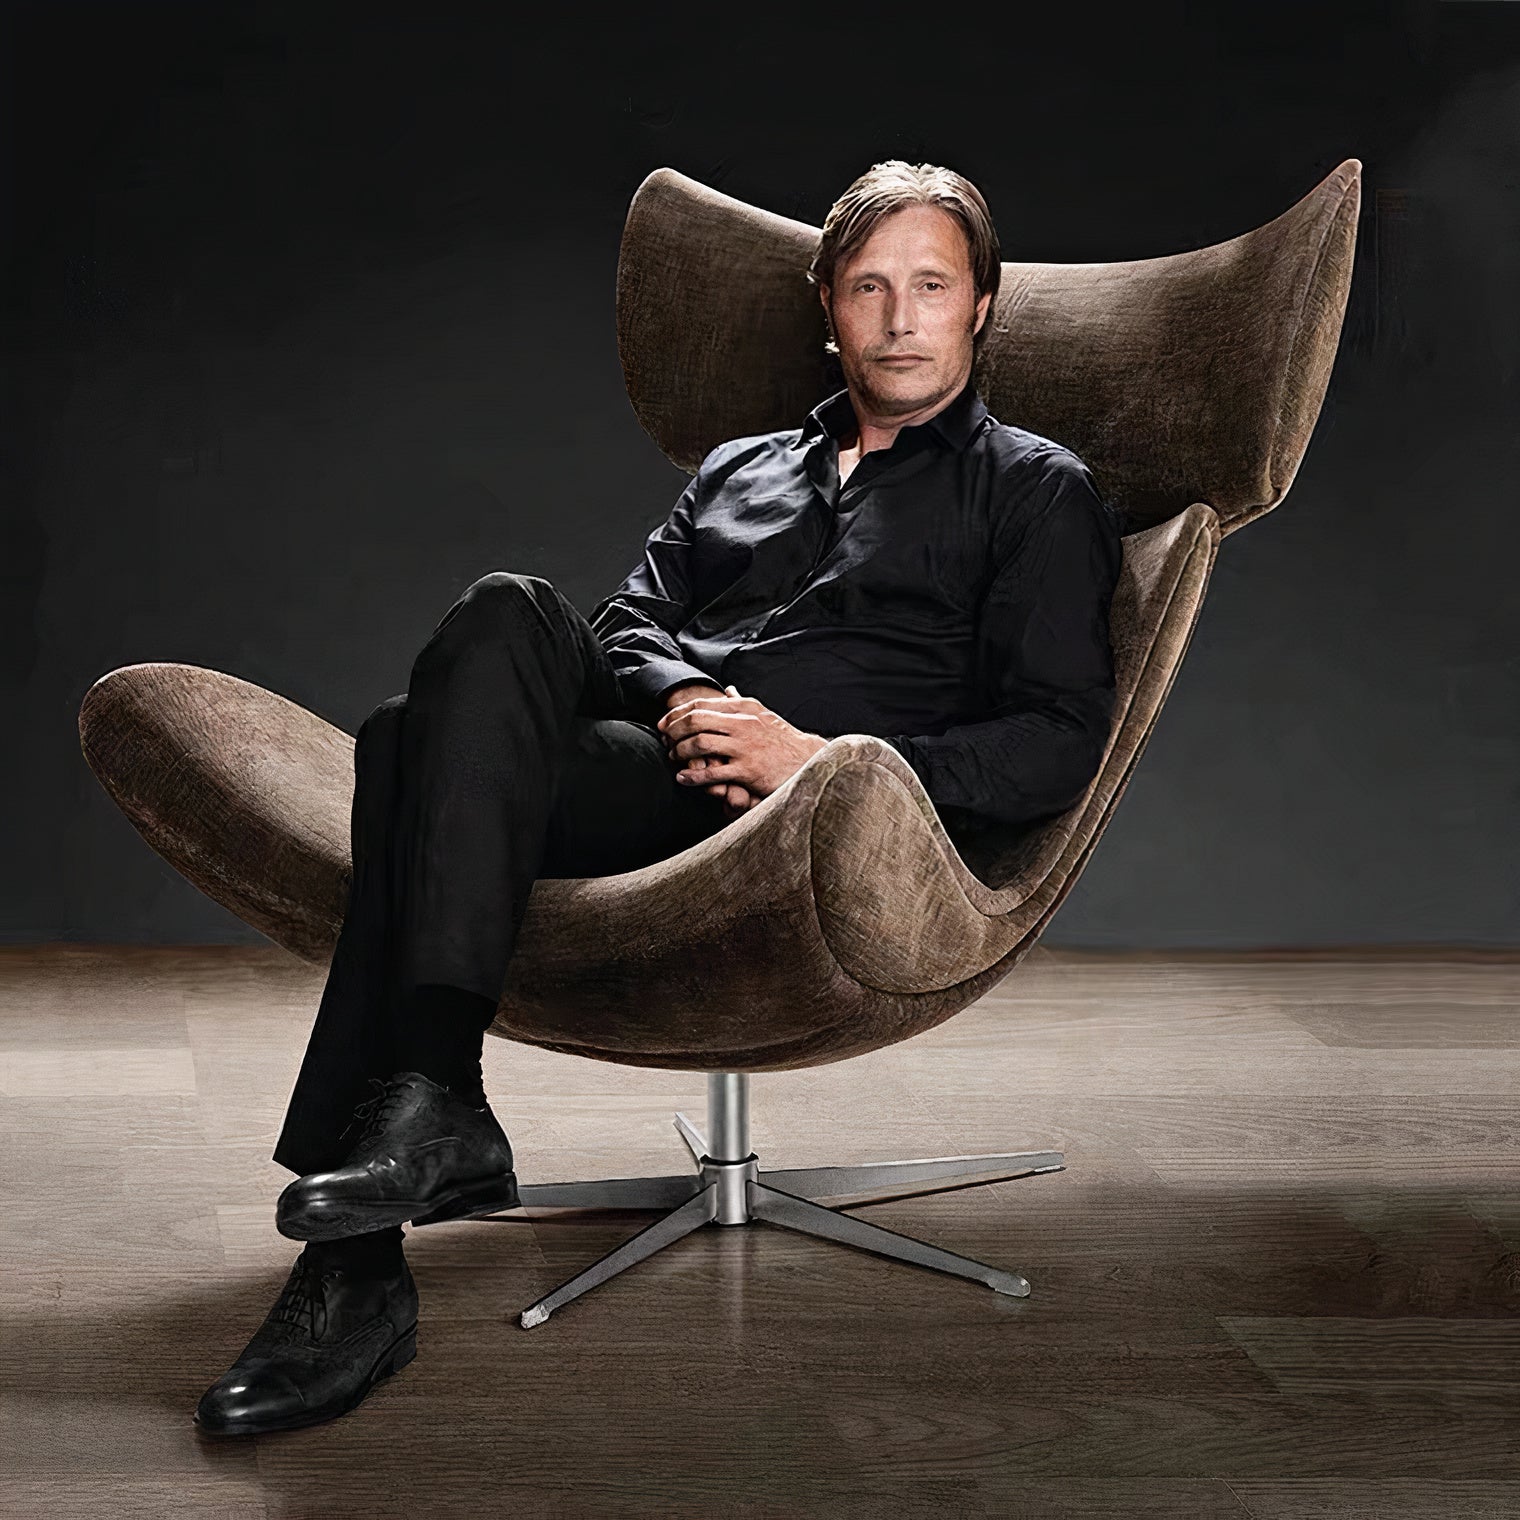 Iconic Imola Chair